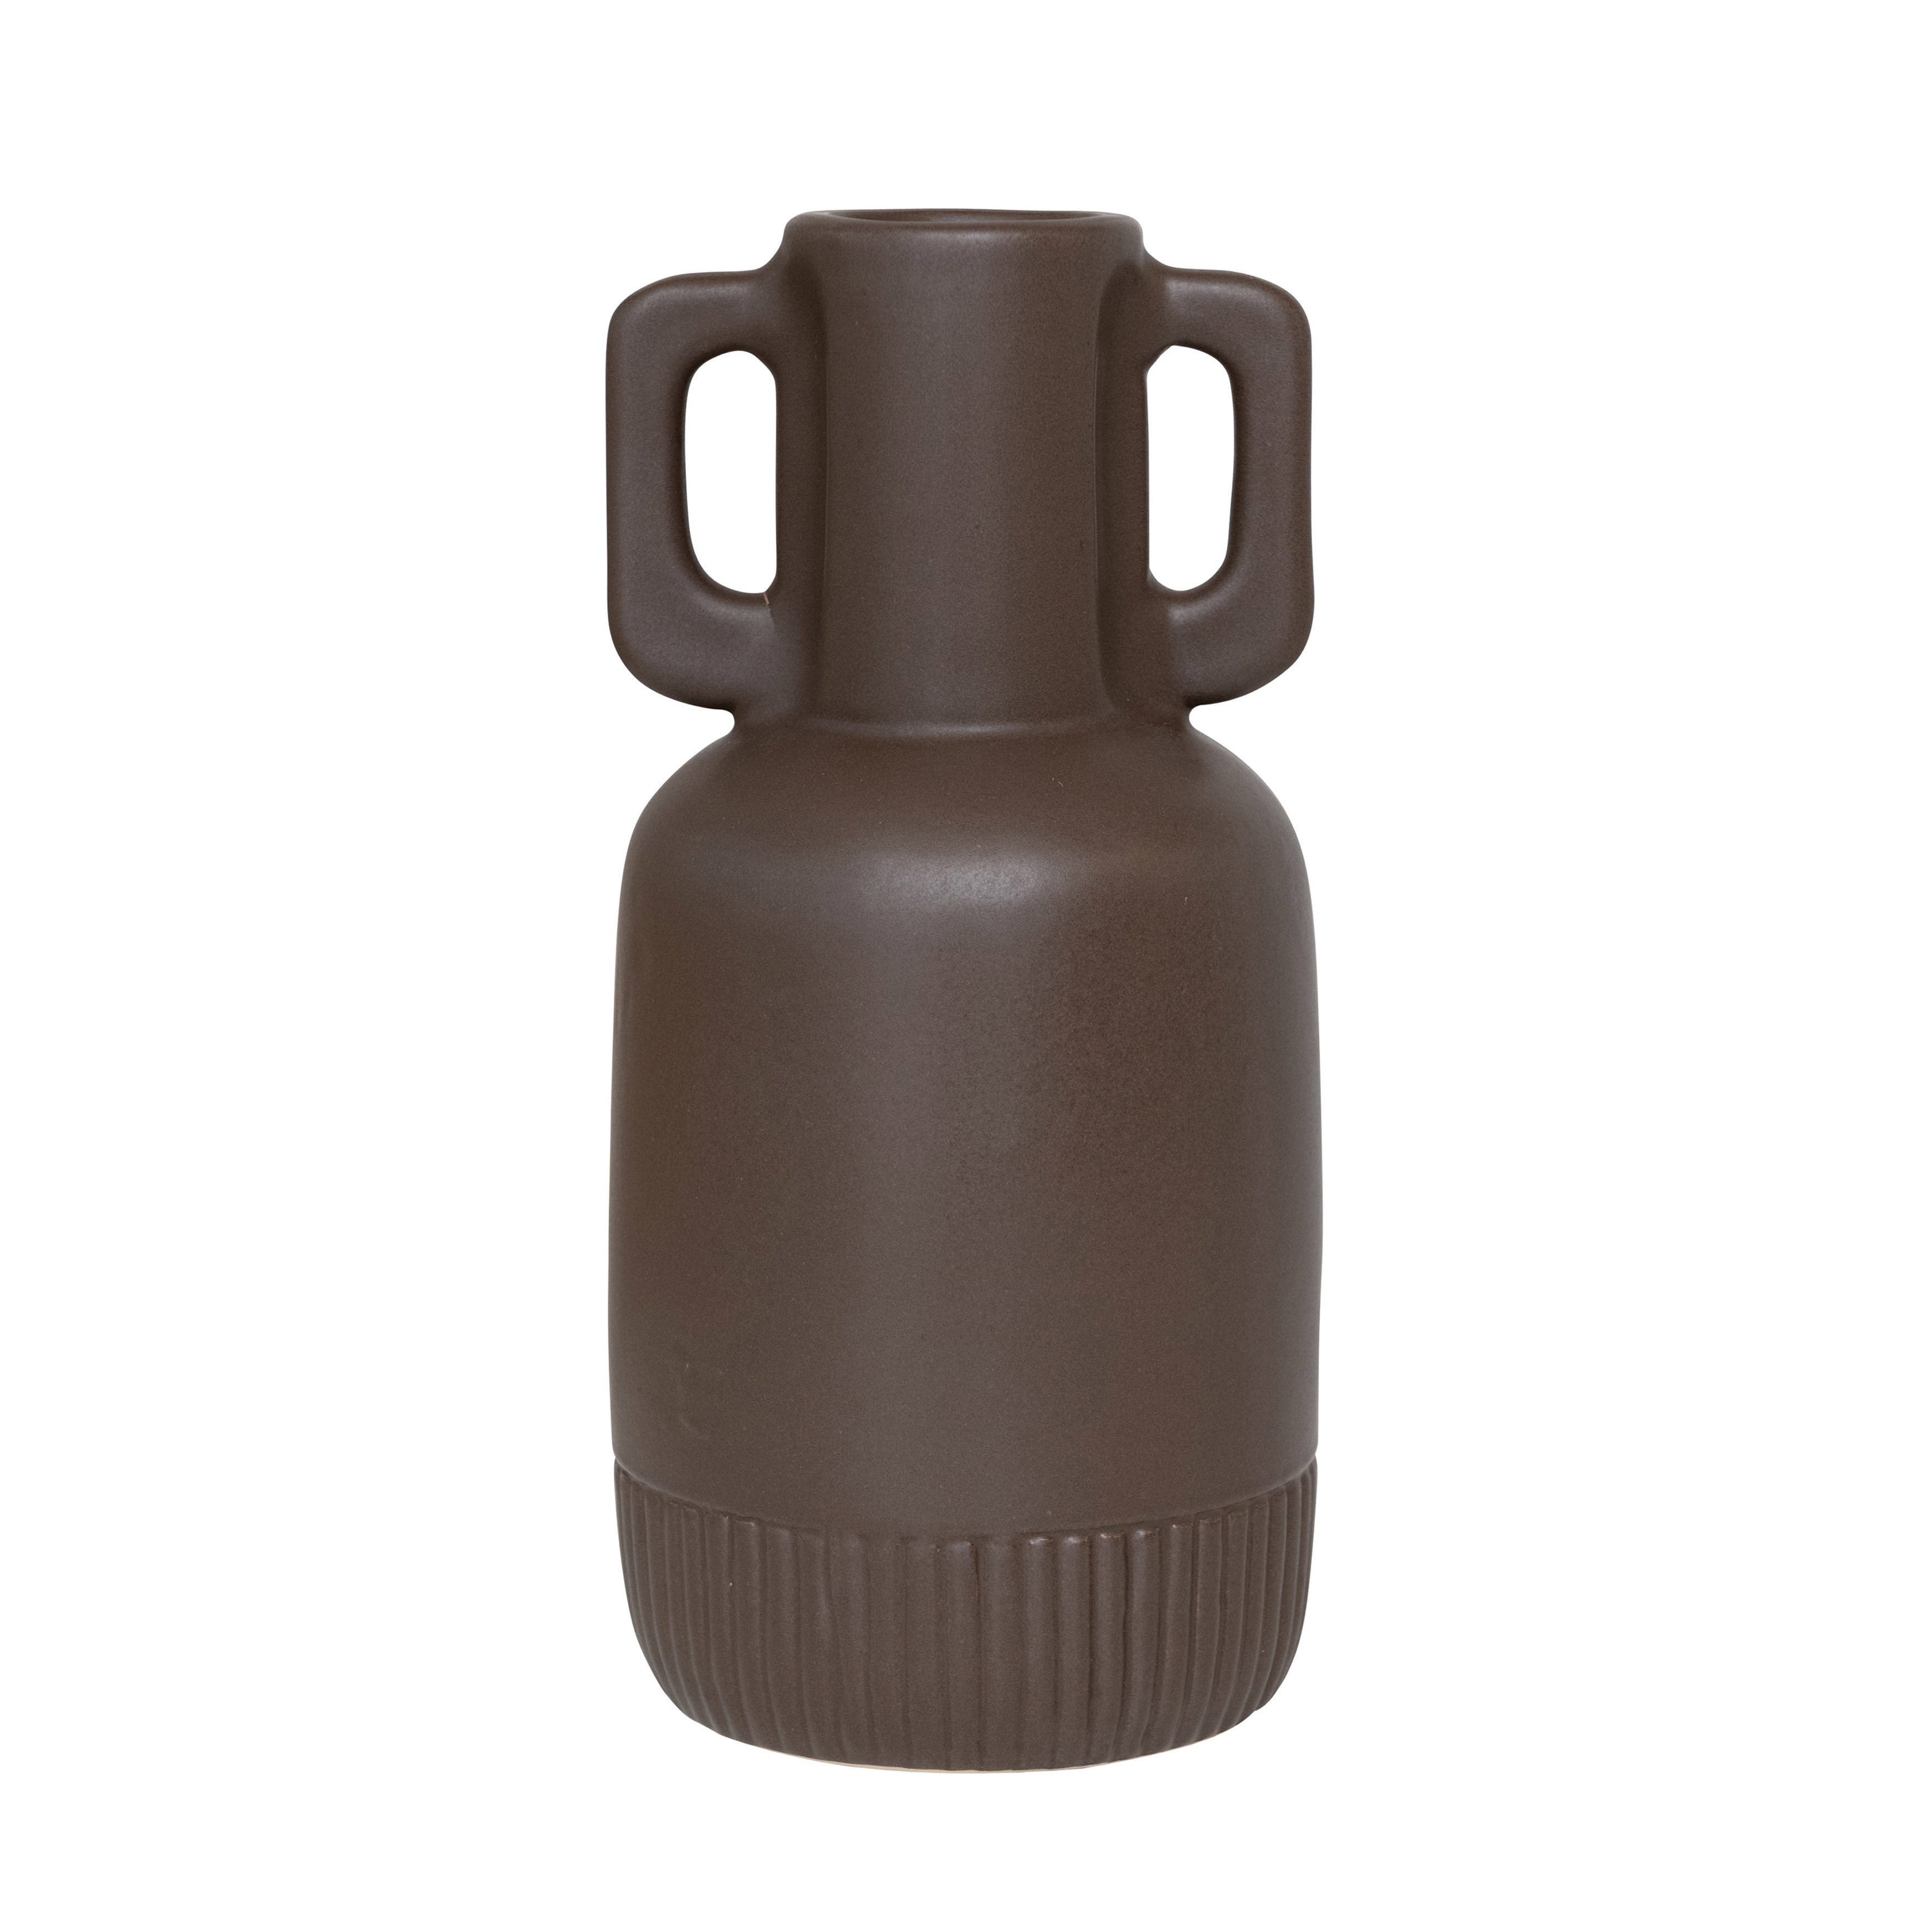  Ceramic Vase with Handles, Matte Brown - Image 0